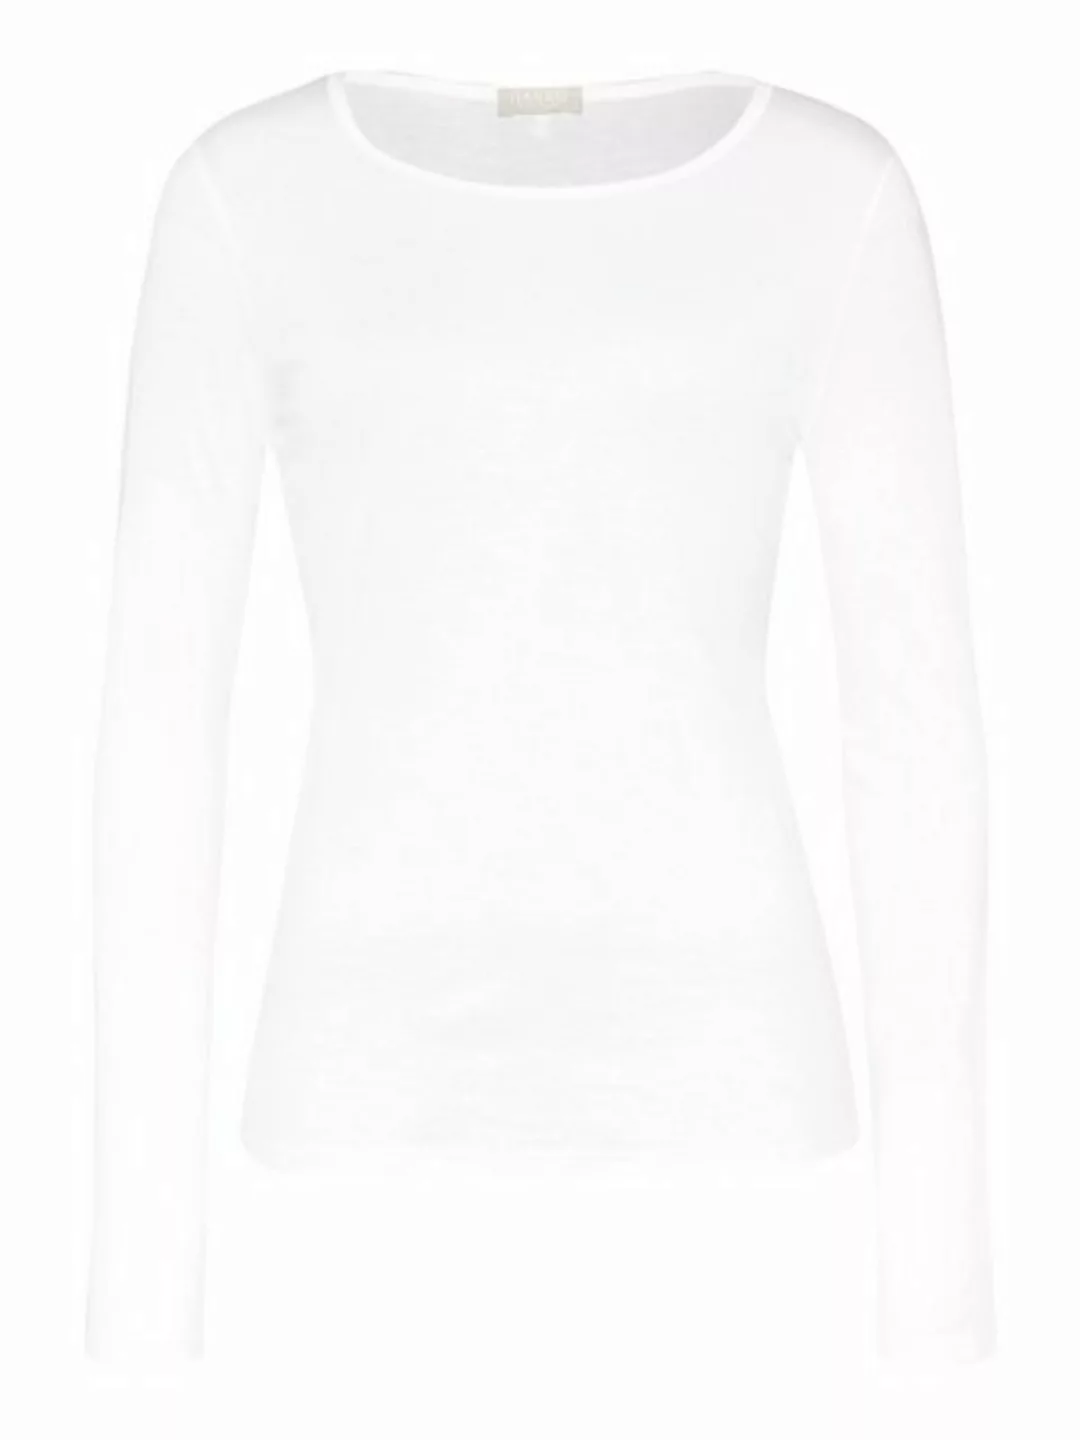 Hanro Longsleeve Ultralight unterhemd shirt langarm günstig online kaufen